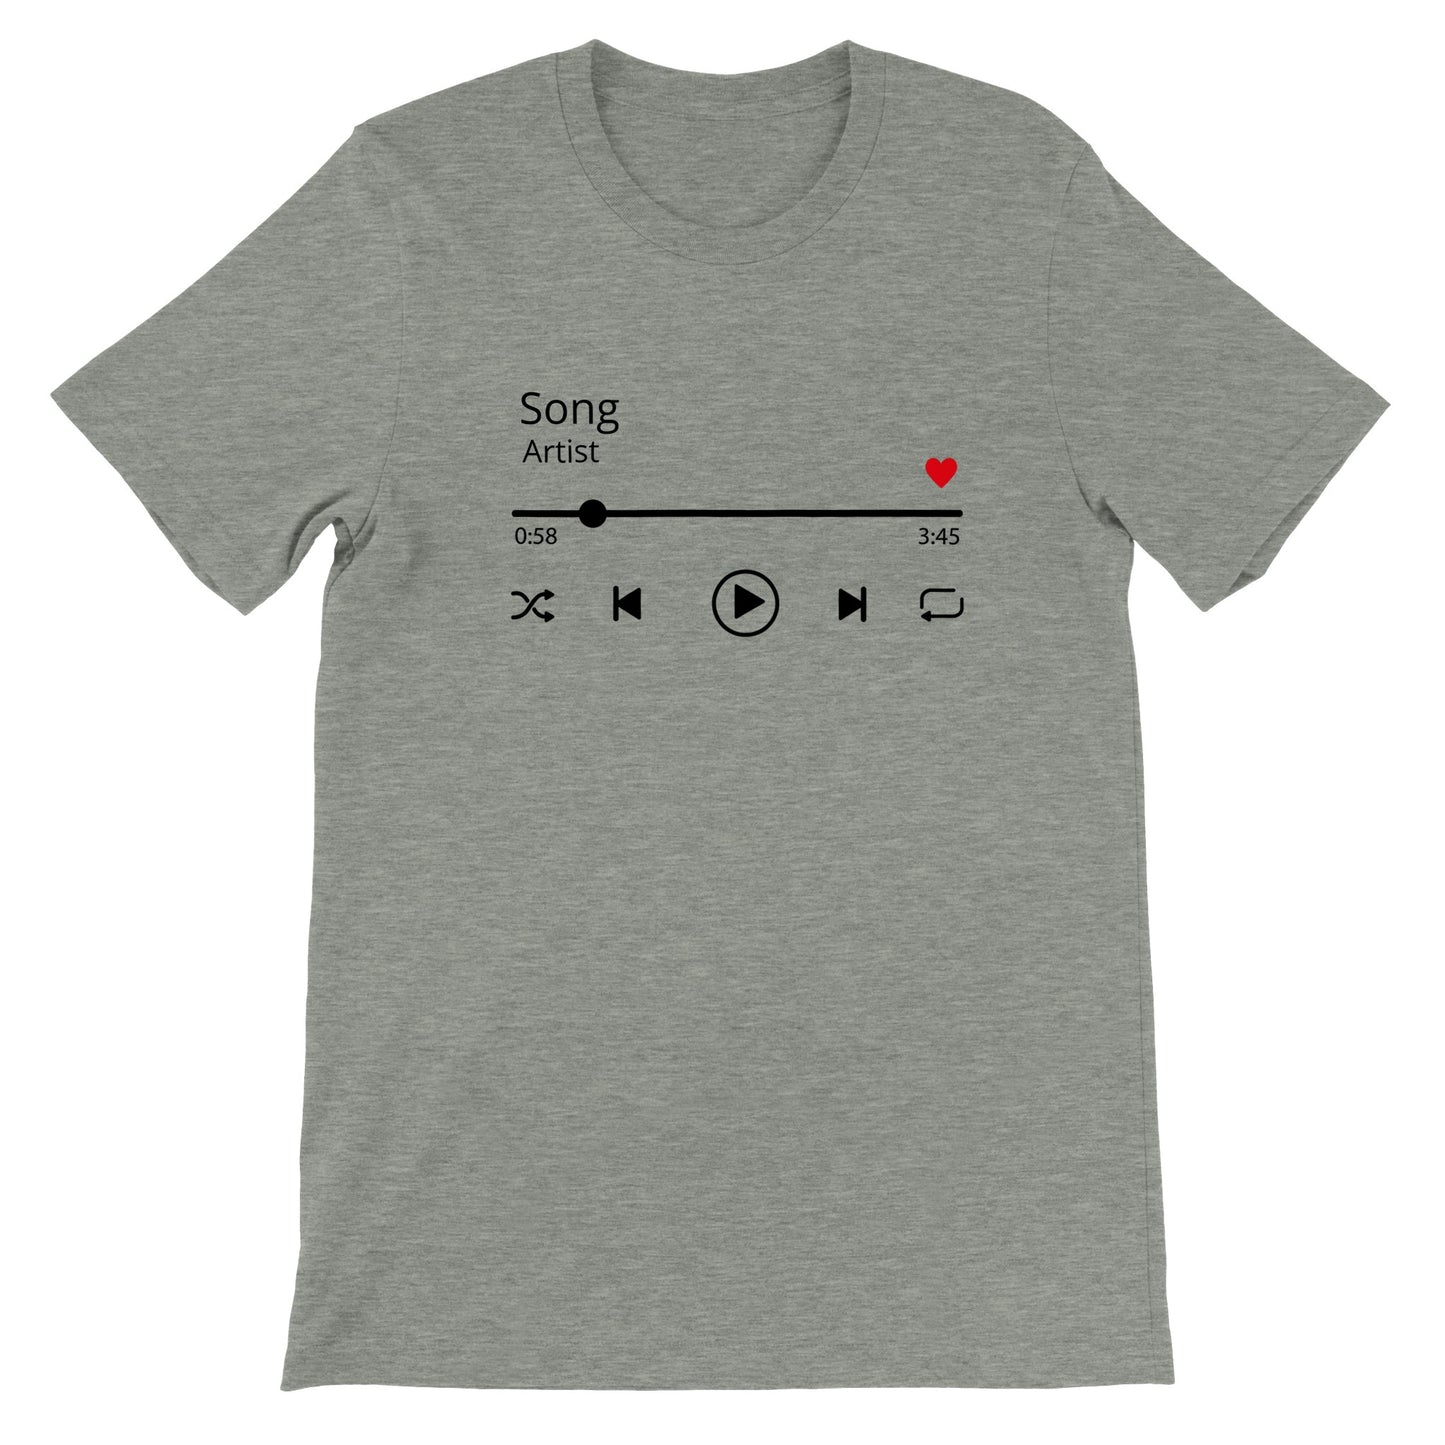 Musik T-shirt - Your Favorite Music Song and Artist Player T-shirt - Premium Unisex T-shirt